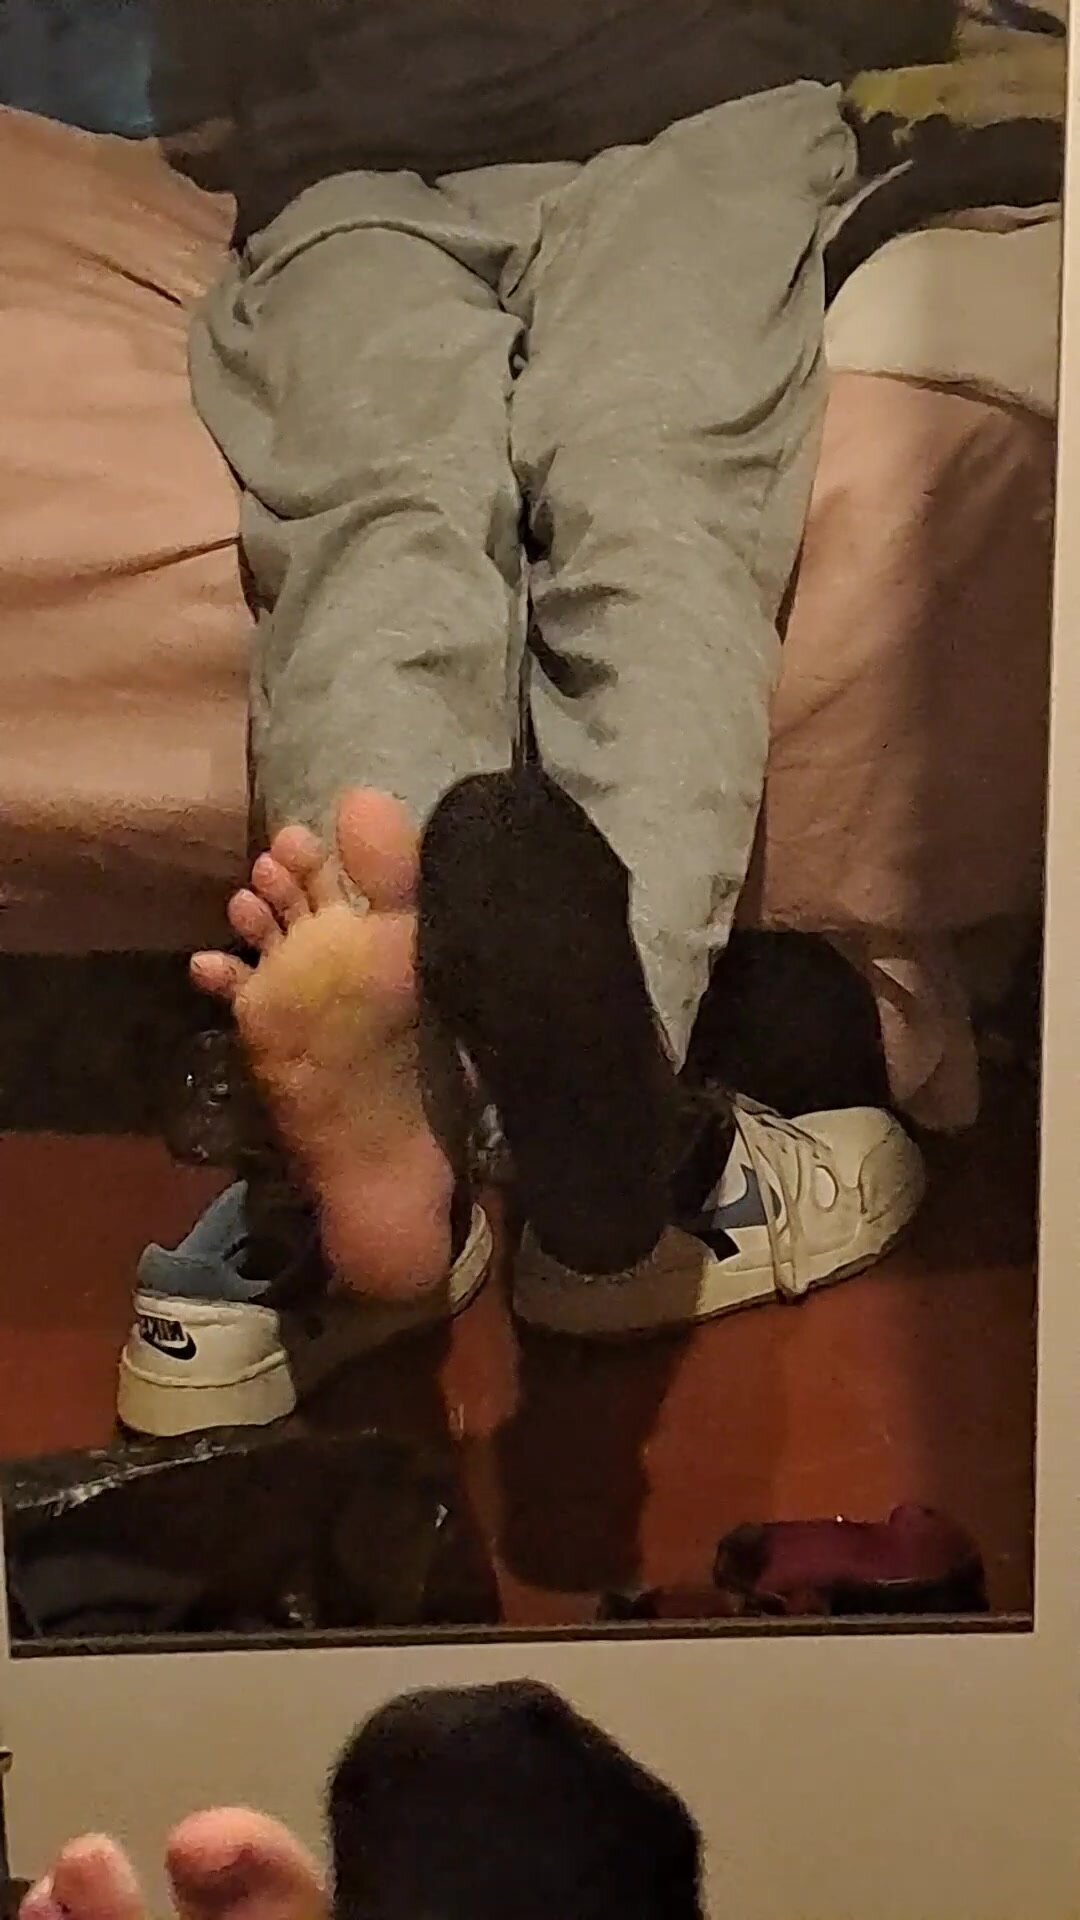 My sweaty teen boy feet